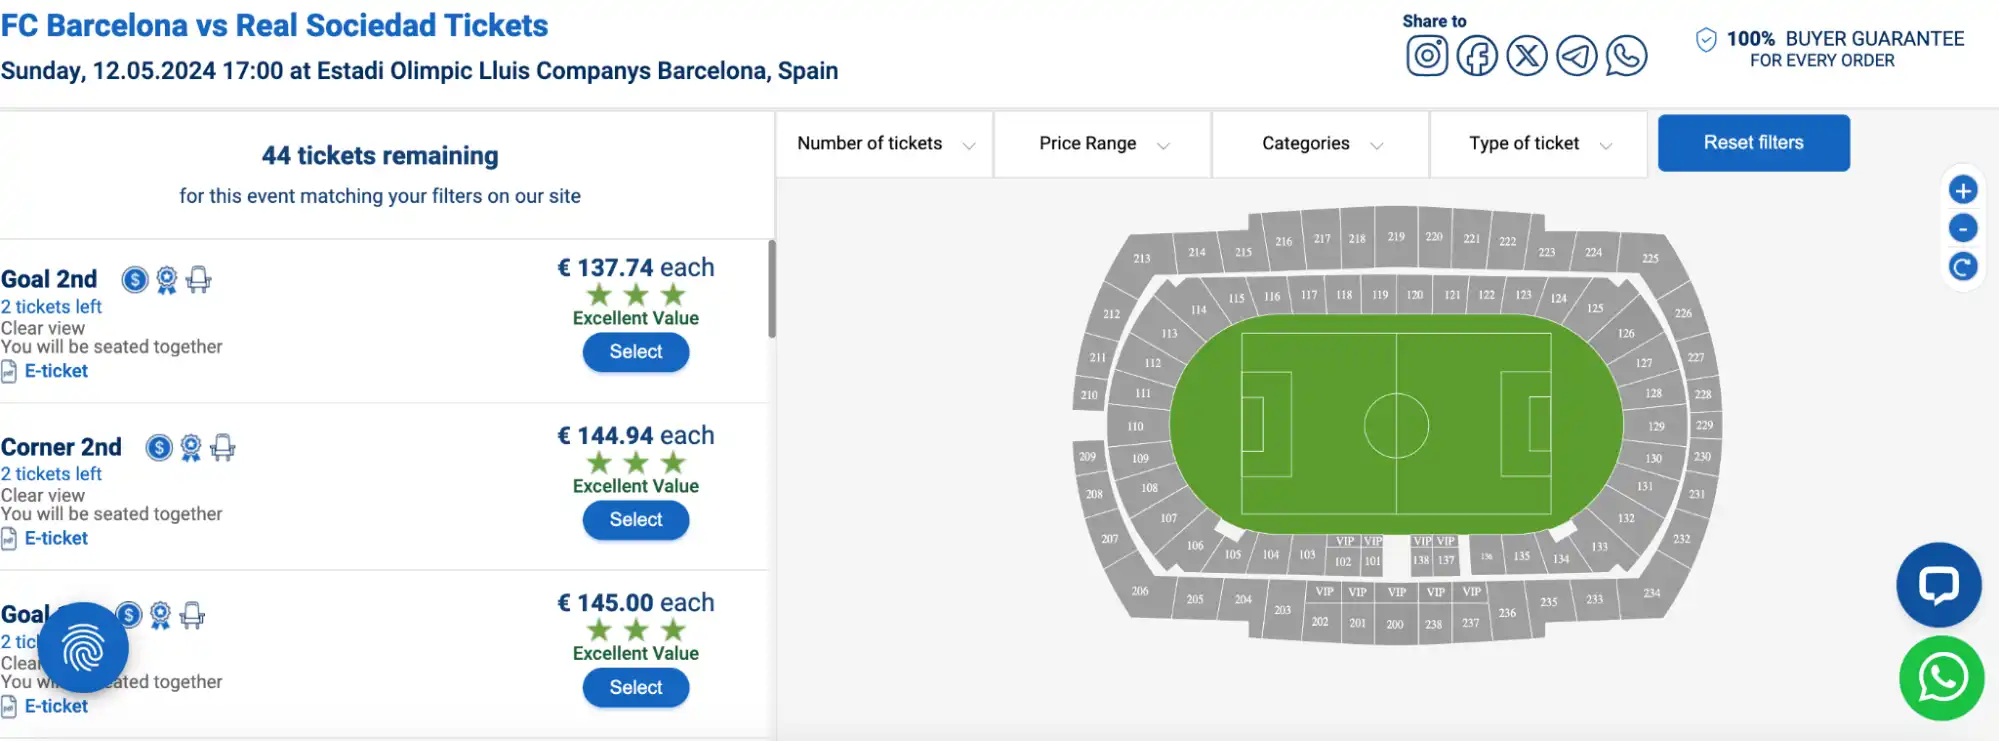 screenshot of FC Barcelona vs Real Sociedad tickets page